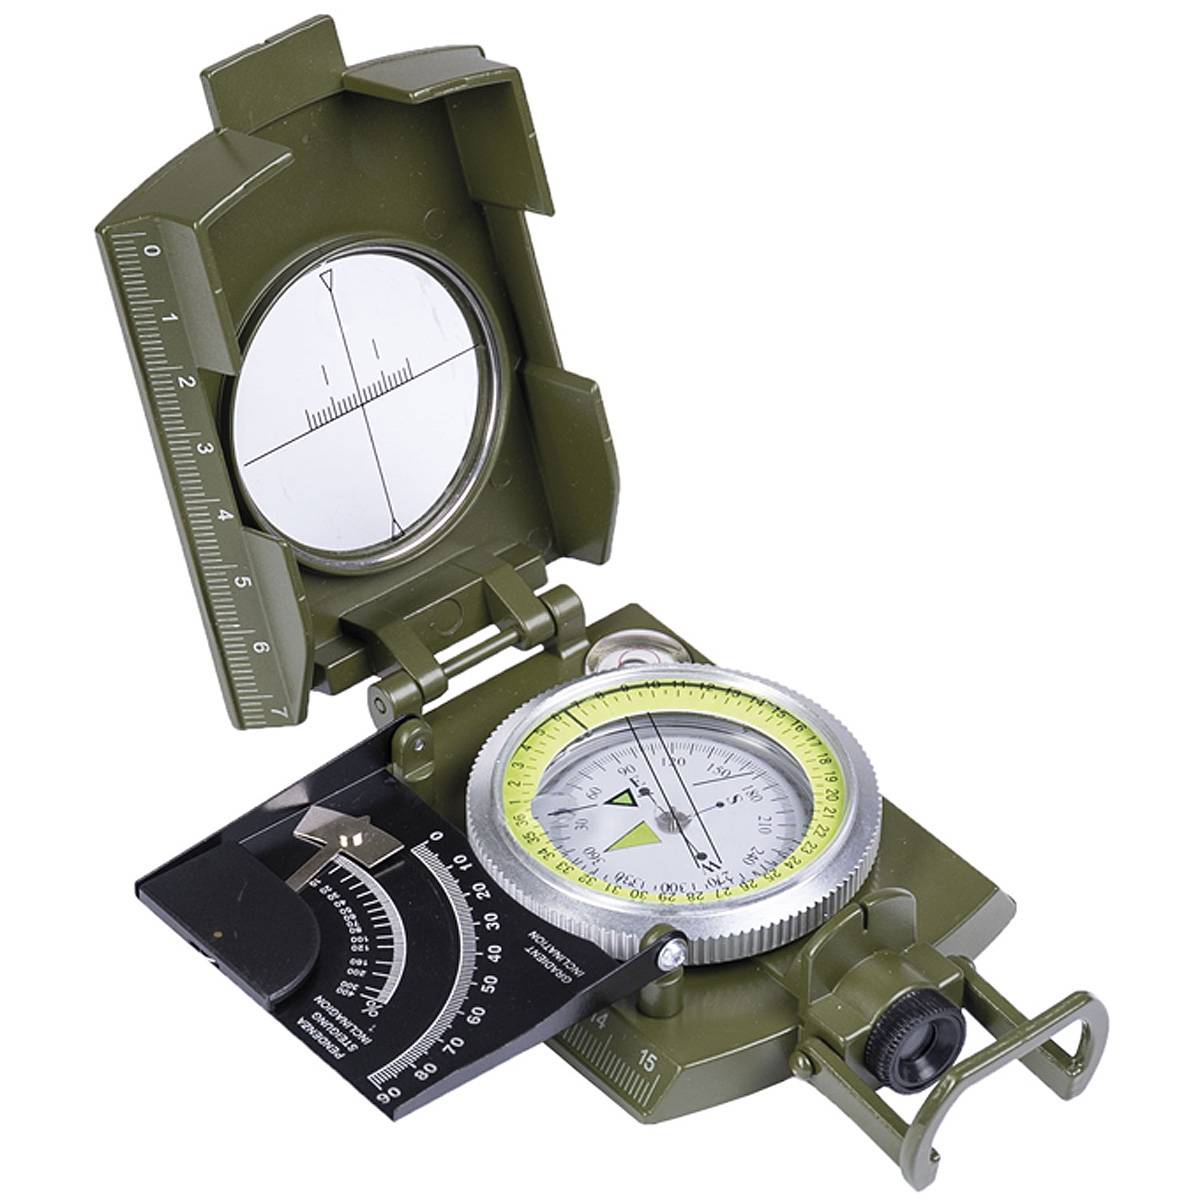 Kompass Marschkompass Metallgehäuse Bundeswehr Armeekompass mit Etui Oliv 